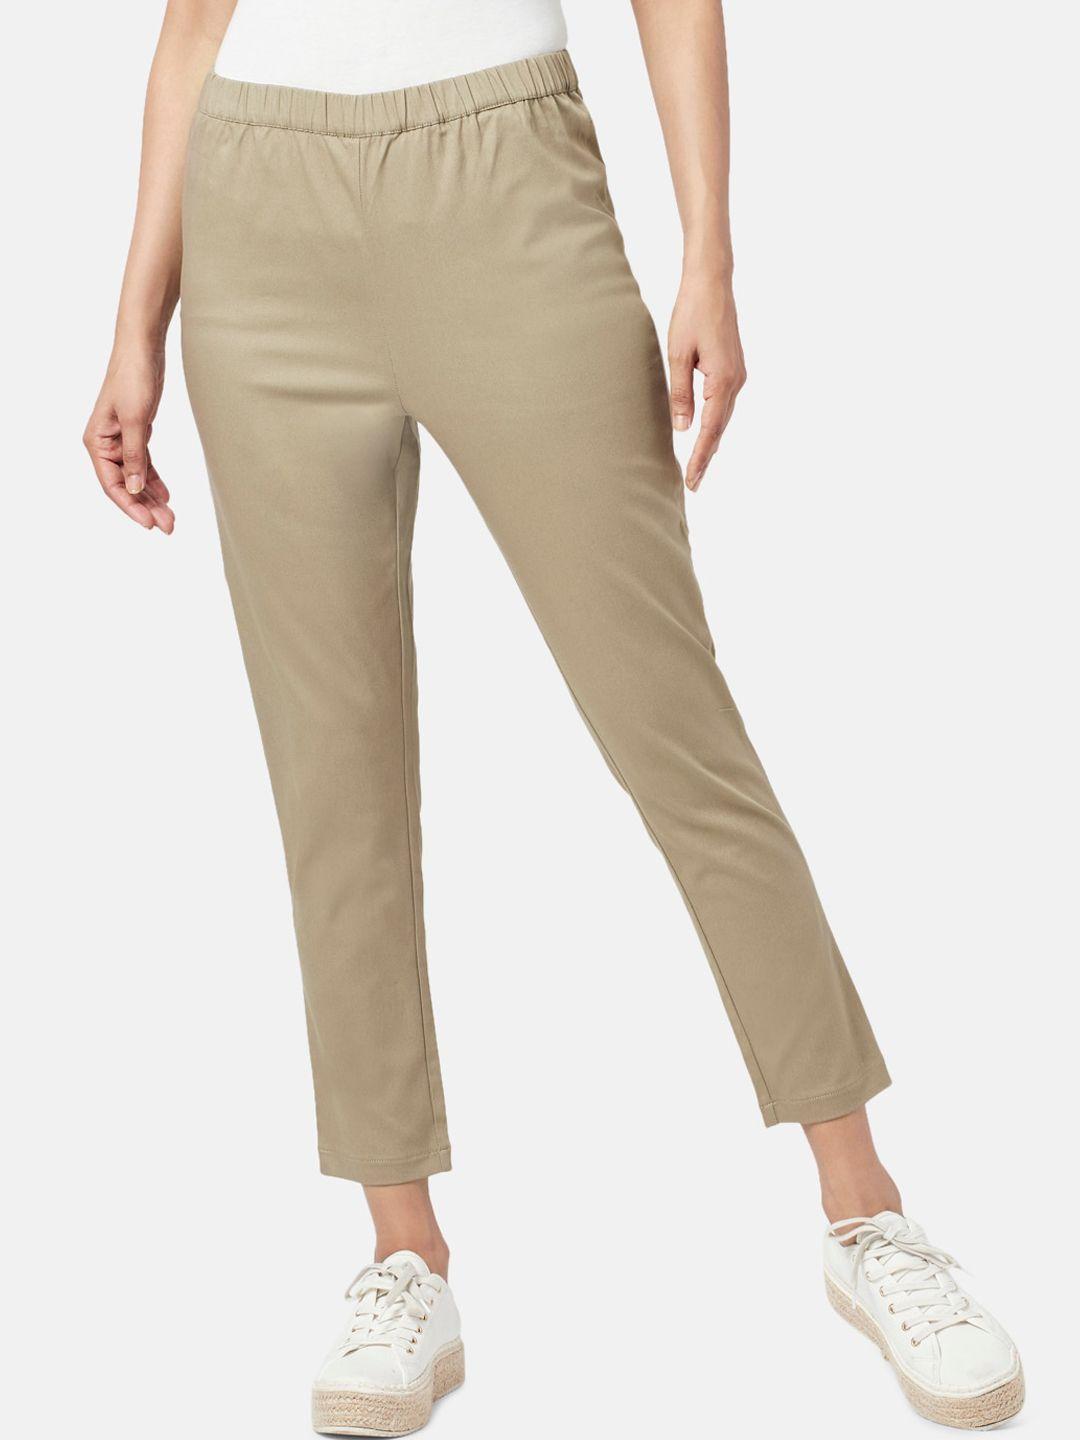 akkriti-by-pantaloons-women-cotton-trousers